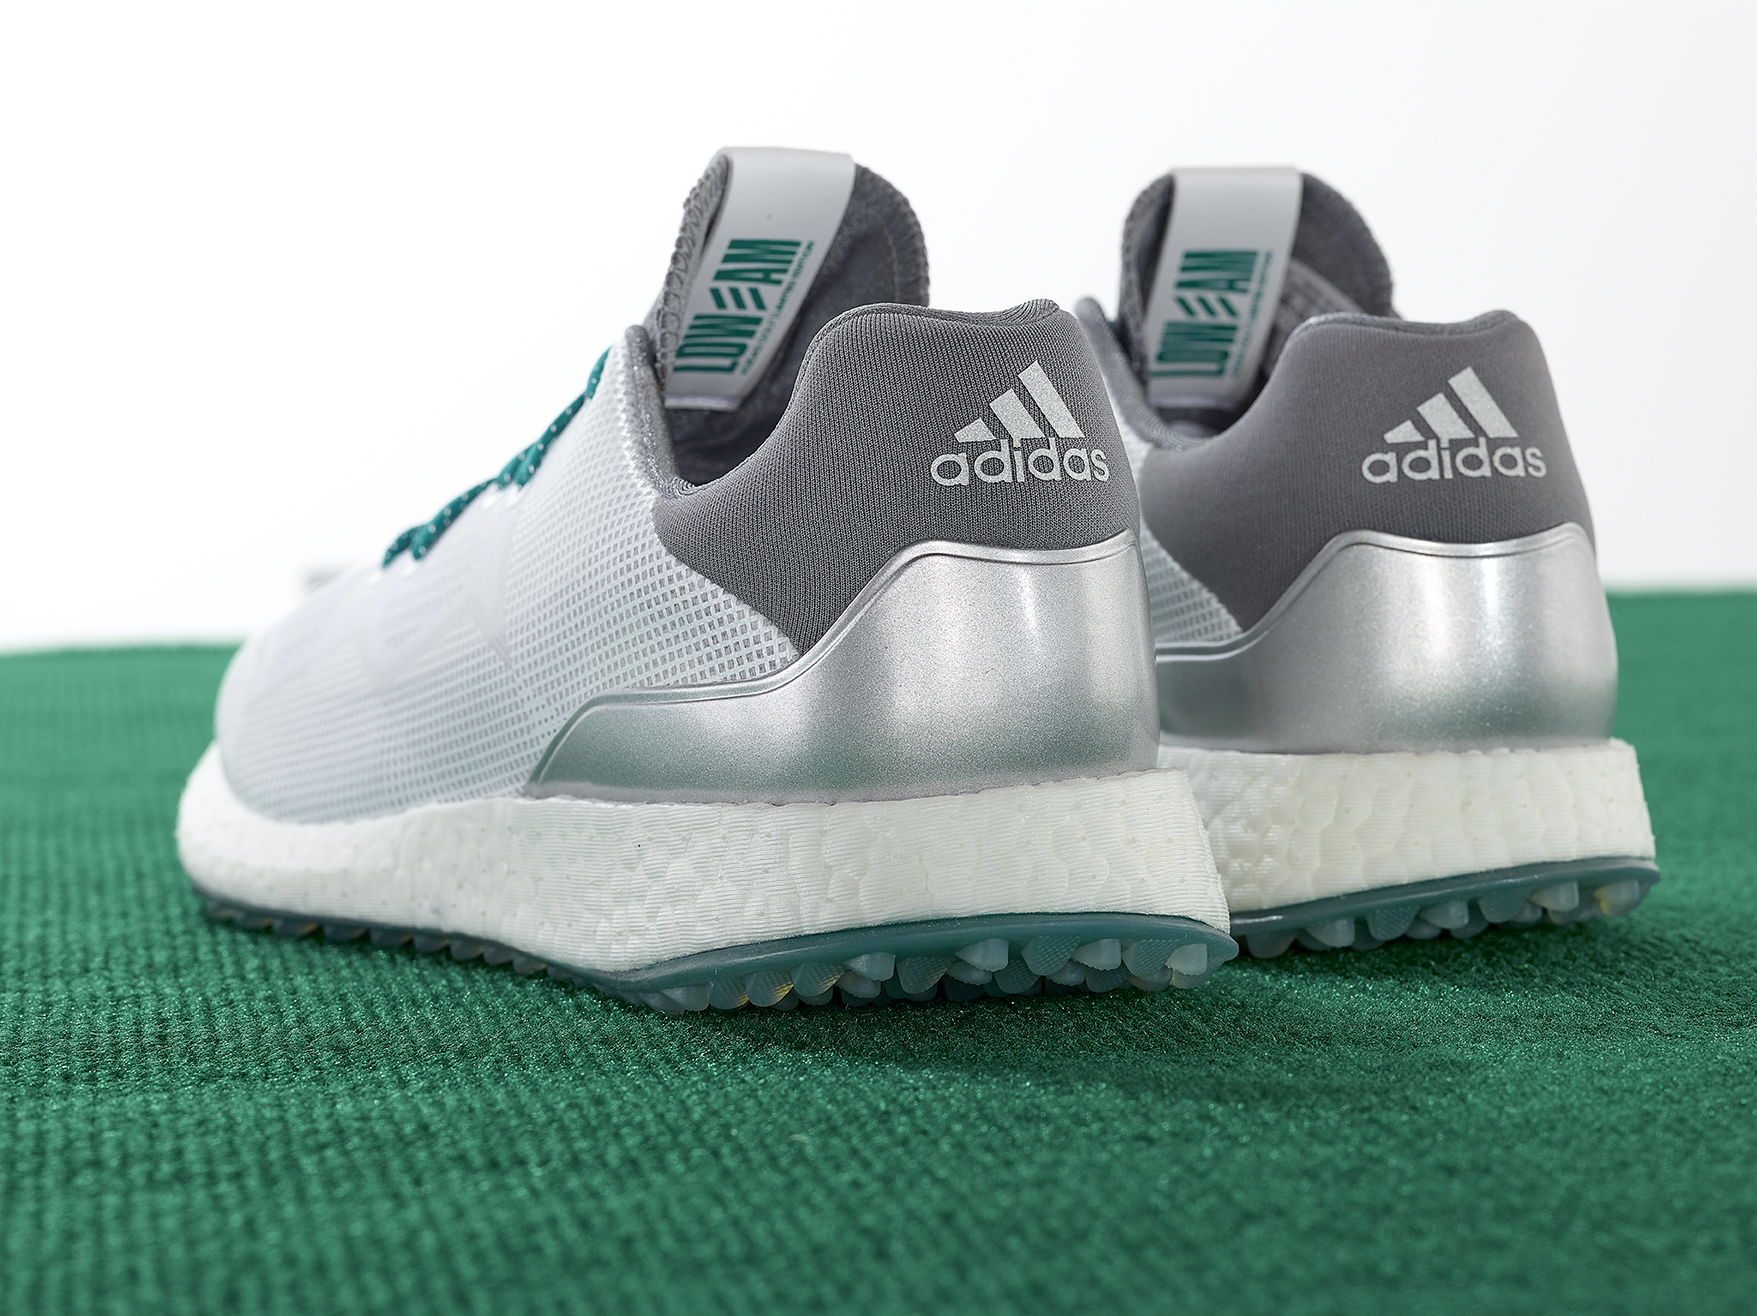 Adidas' new Crossknit DPR golf shoes 